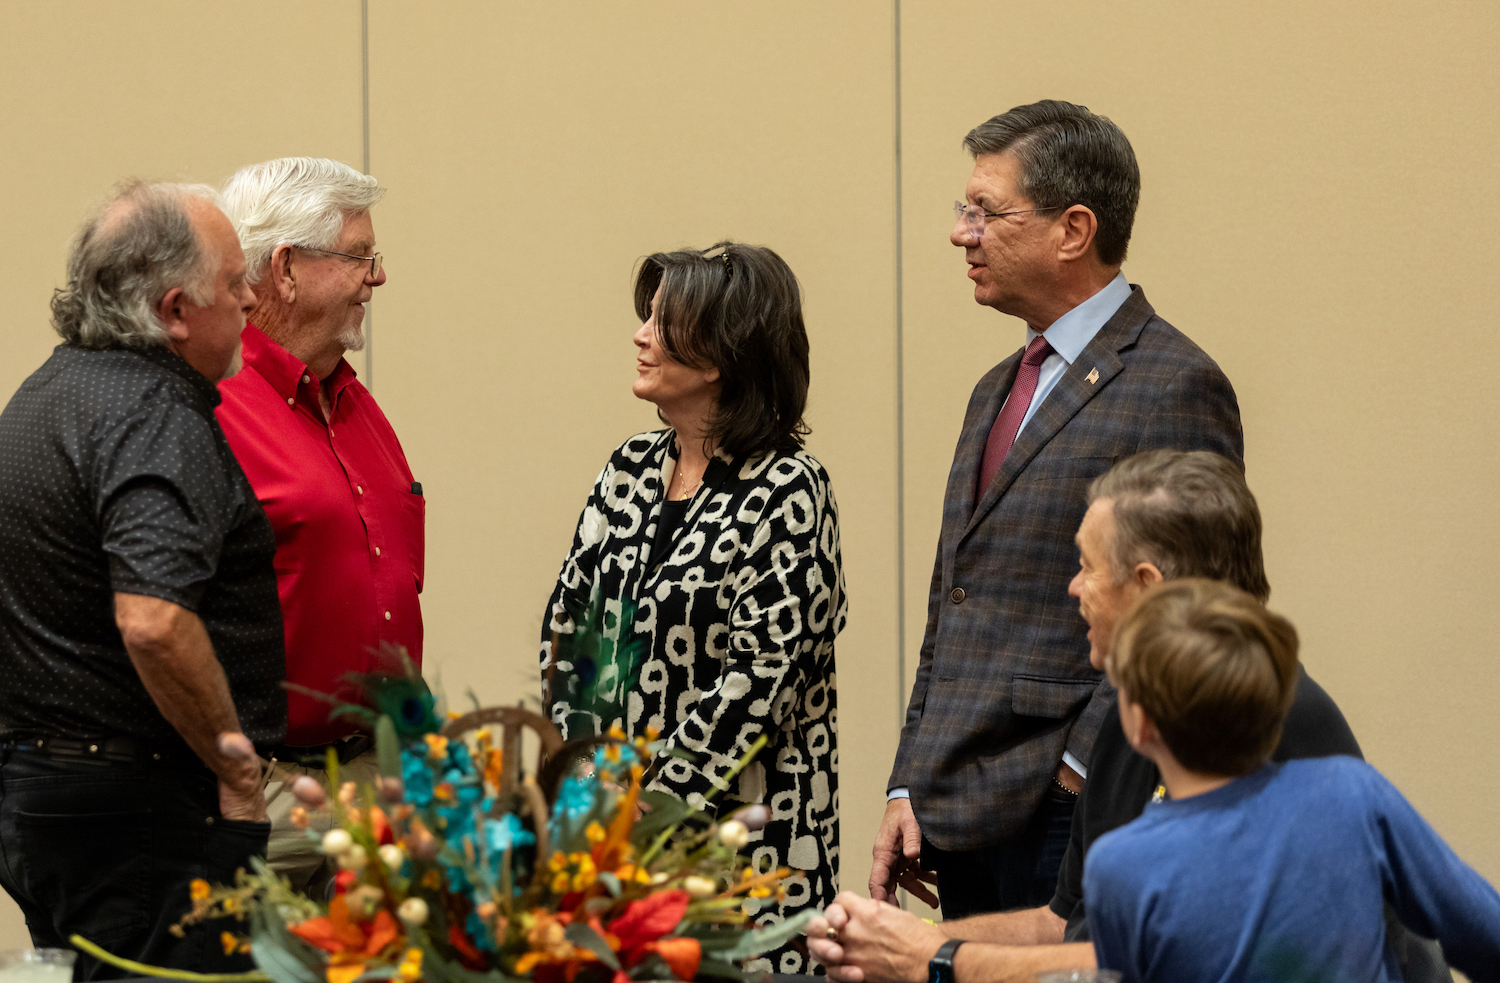 WVSOM President James W. Nemitz, Ph.D., and his wife, Nancy Bulla Nemitz, talk with guests